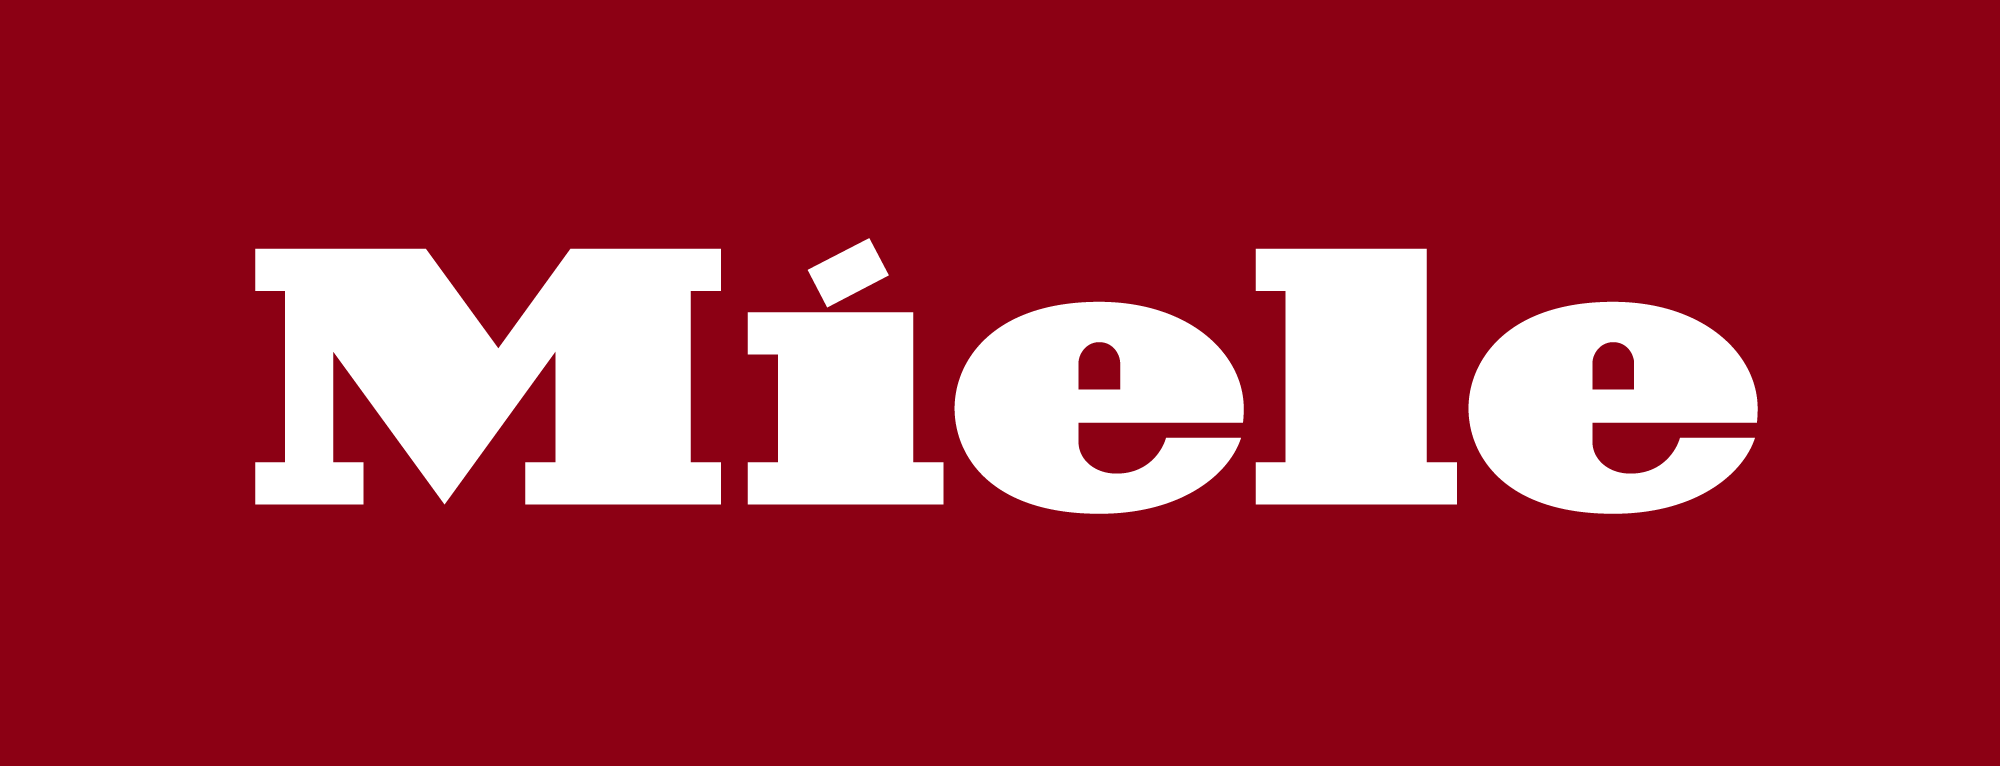 German Cosmetic Company Logo - Miele